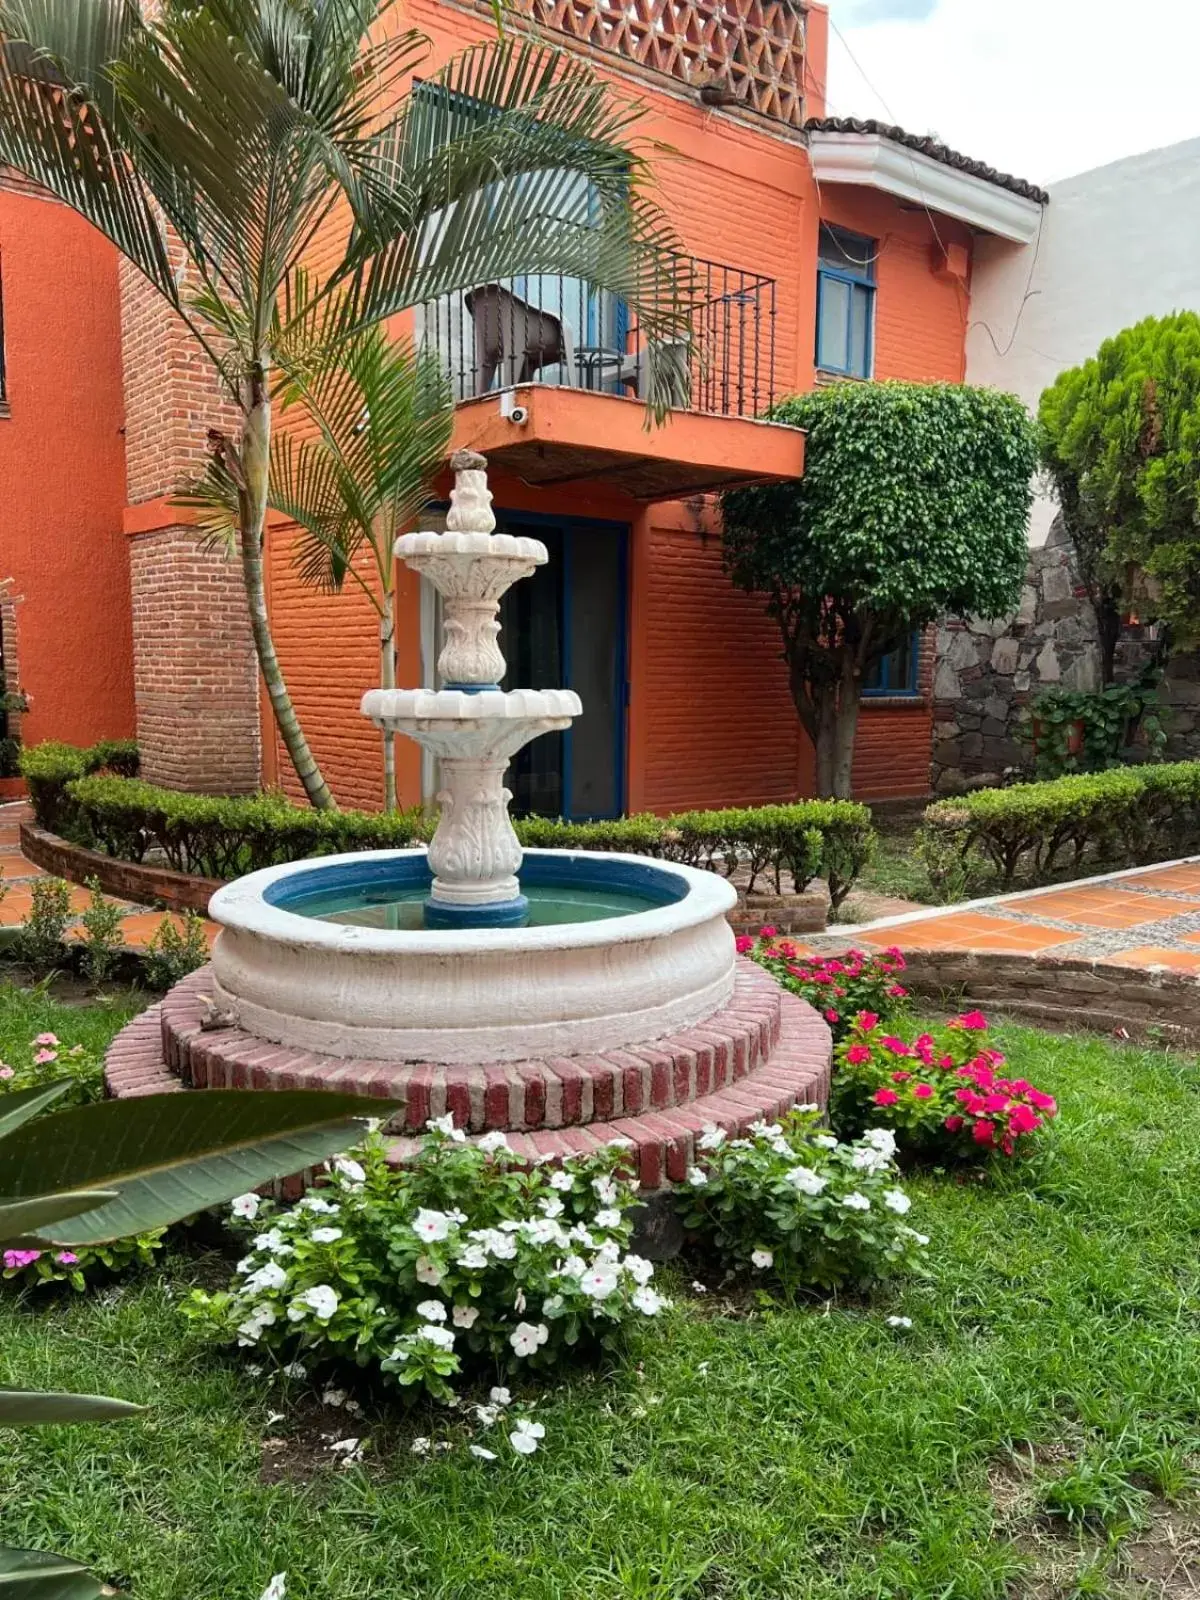 Garden in Hotel Villas Ajijic, Ajijic Chapala Jalisco